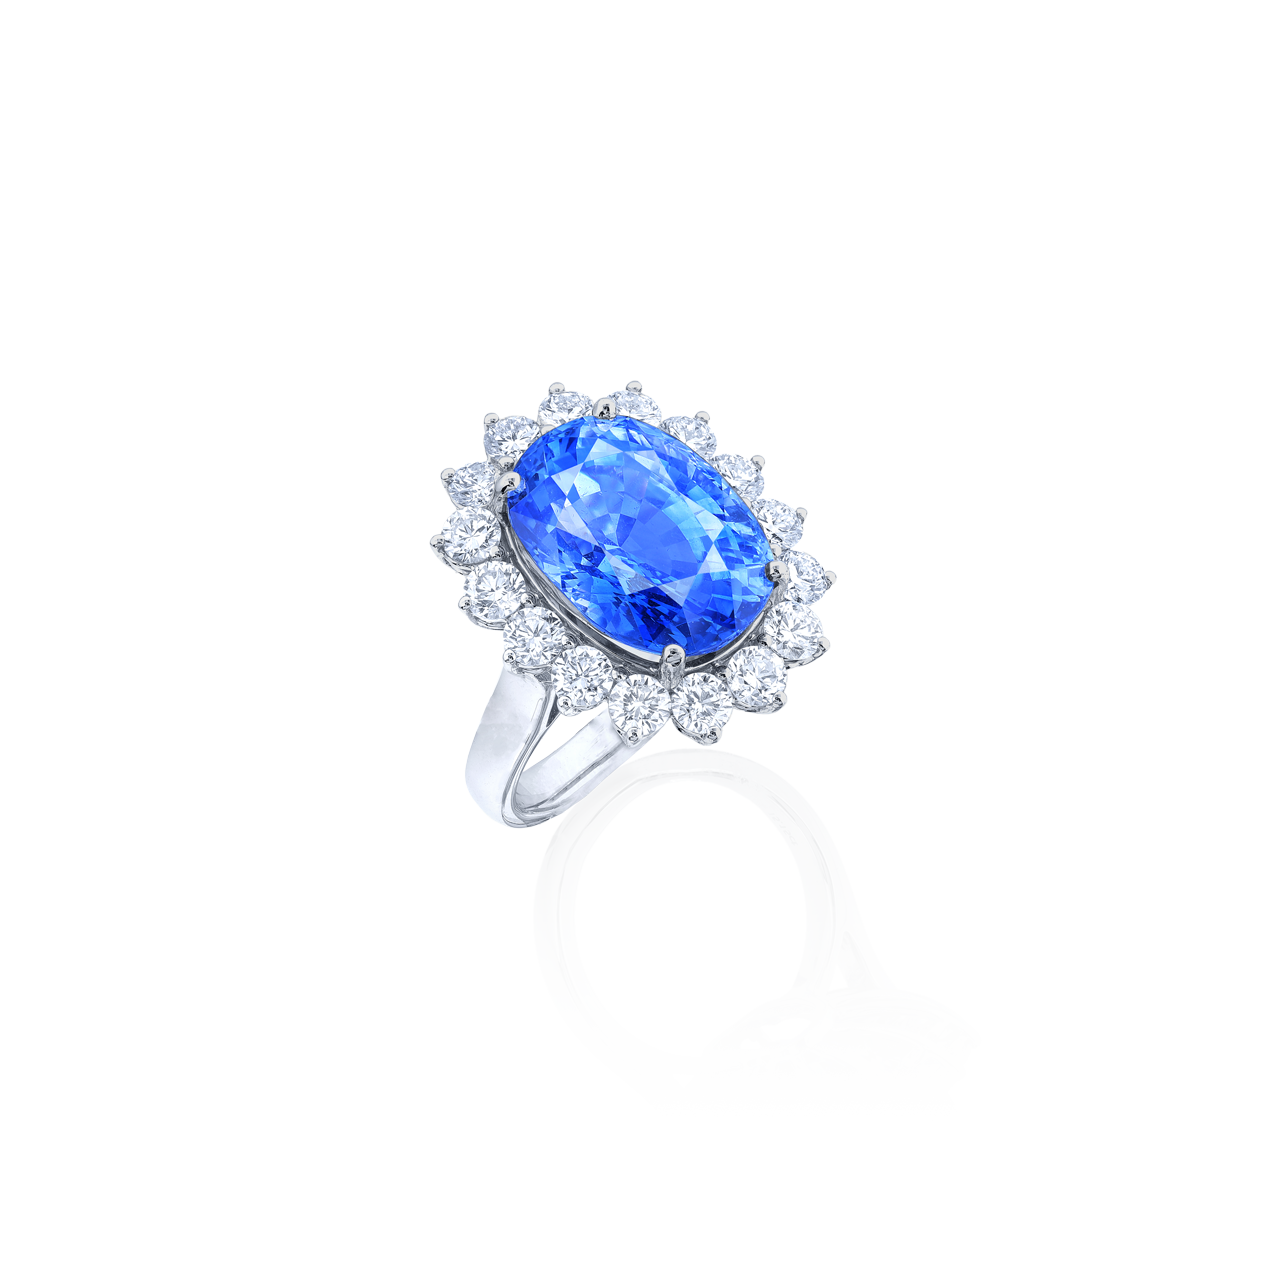 GRS 15.15克拉 藍寶戒
GRS Blue Sapphire Ring